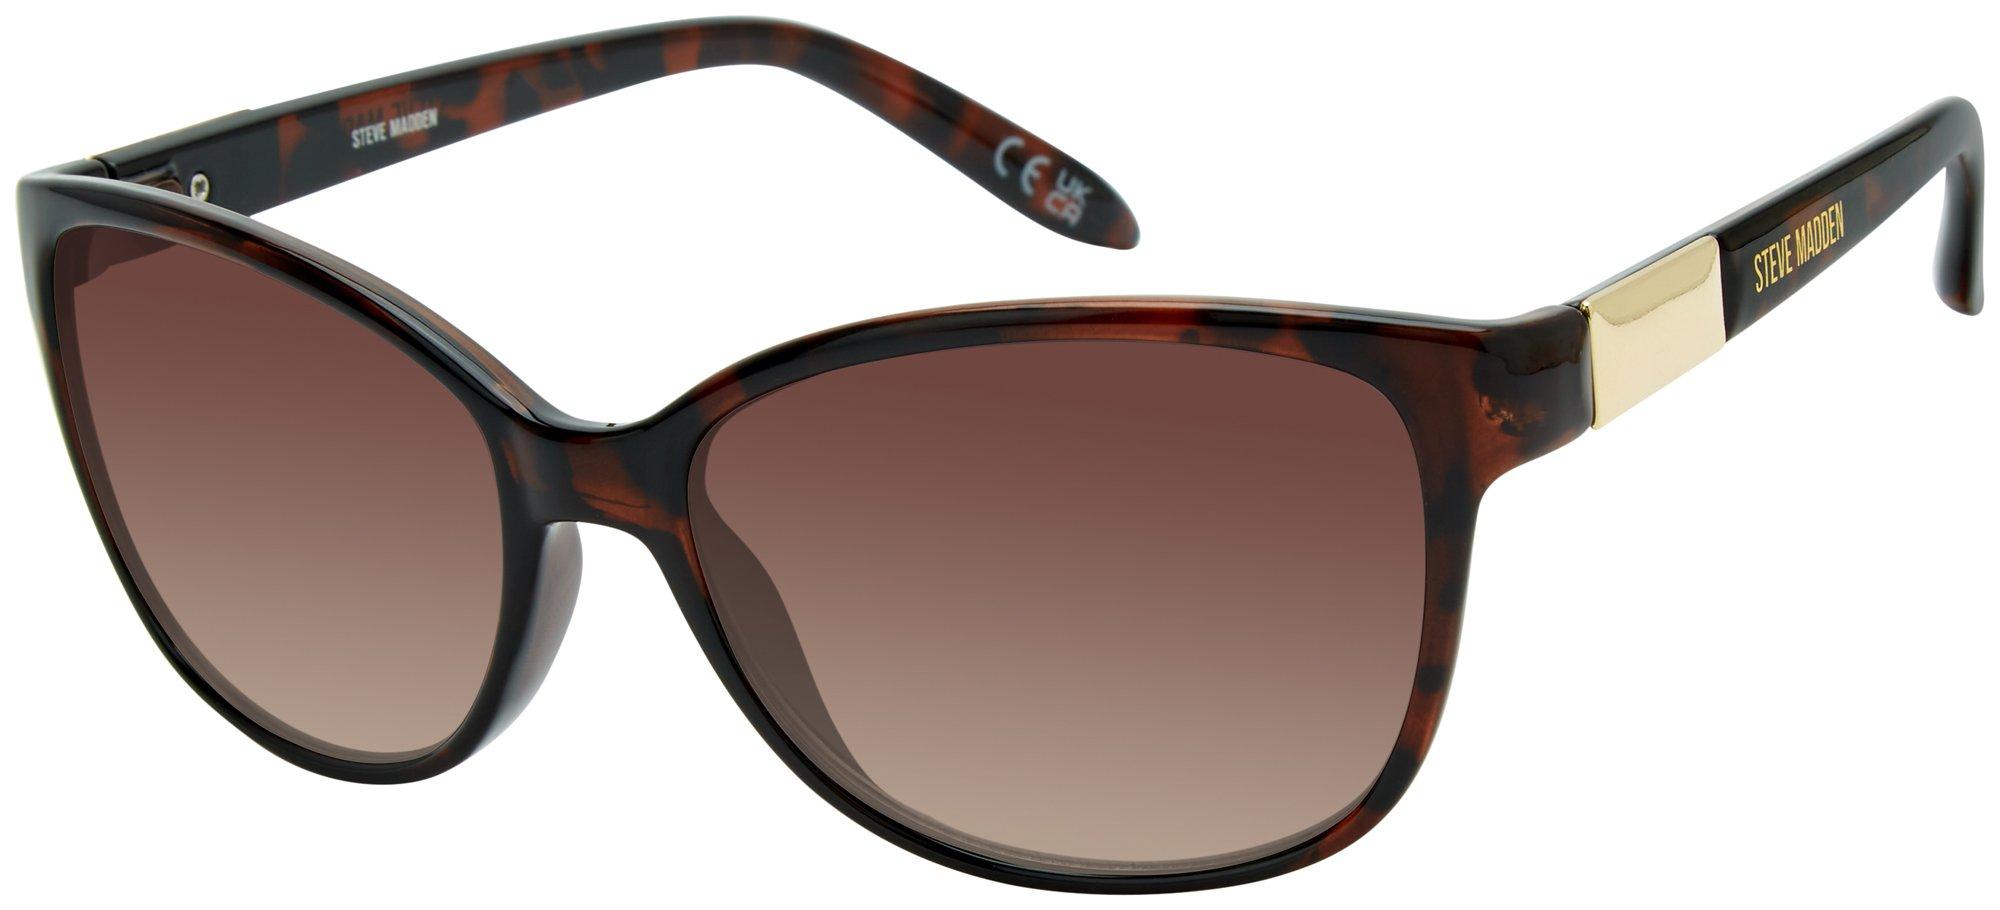 Steve Madden Womens Cateye Tortoise Sunglasses